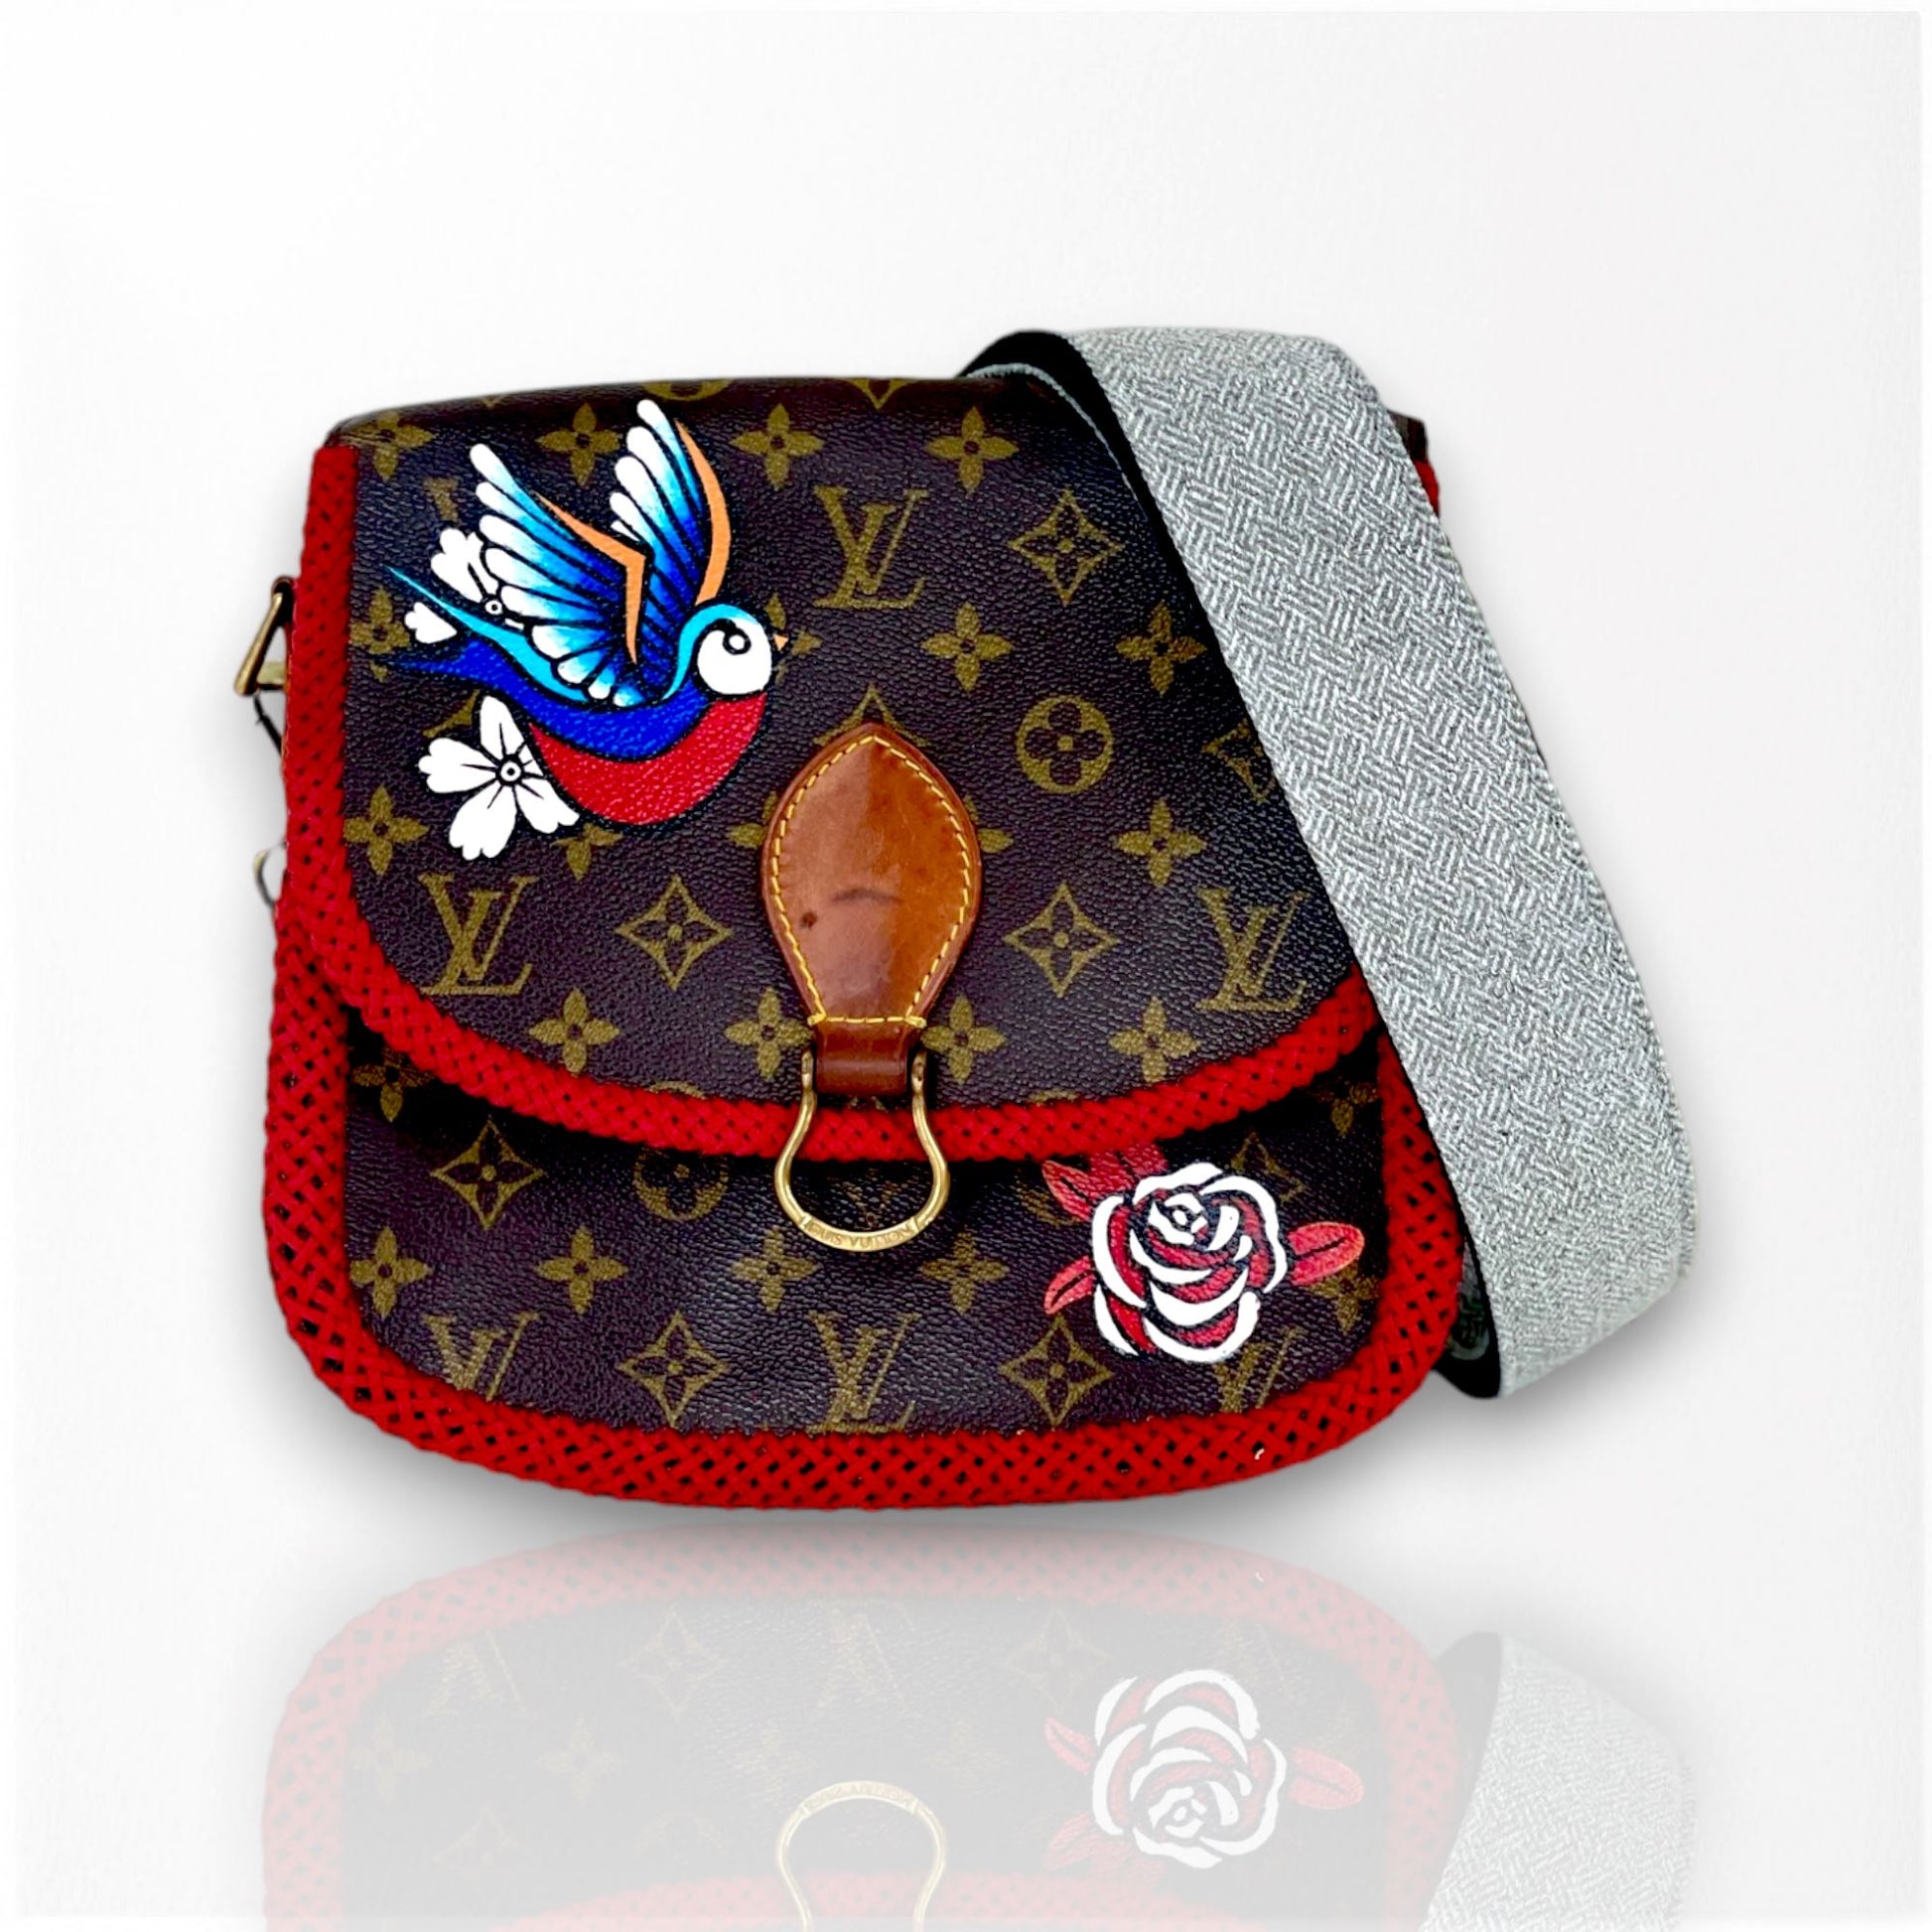 Custom Painted Louis Vuitton St. Cloud Handbag